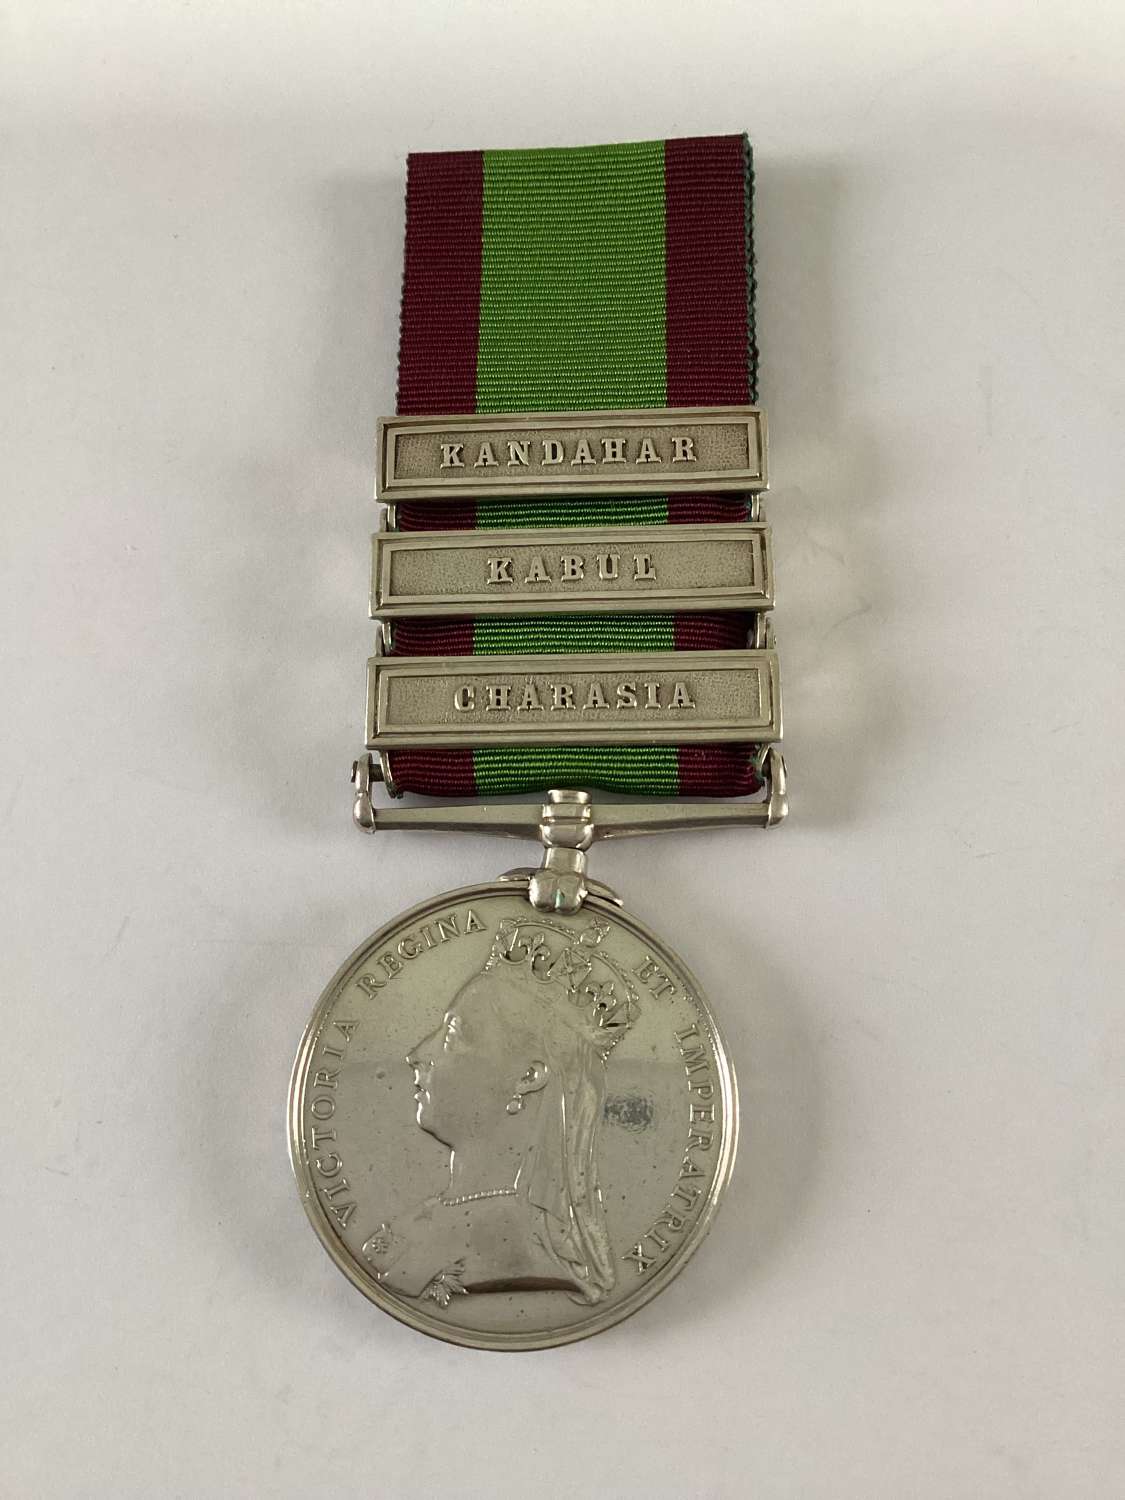 Afghanistan Medal 1881 with bars Charasia / Kabul / Kandahar.9th Lanc.